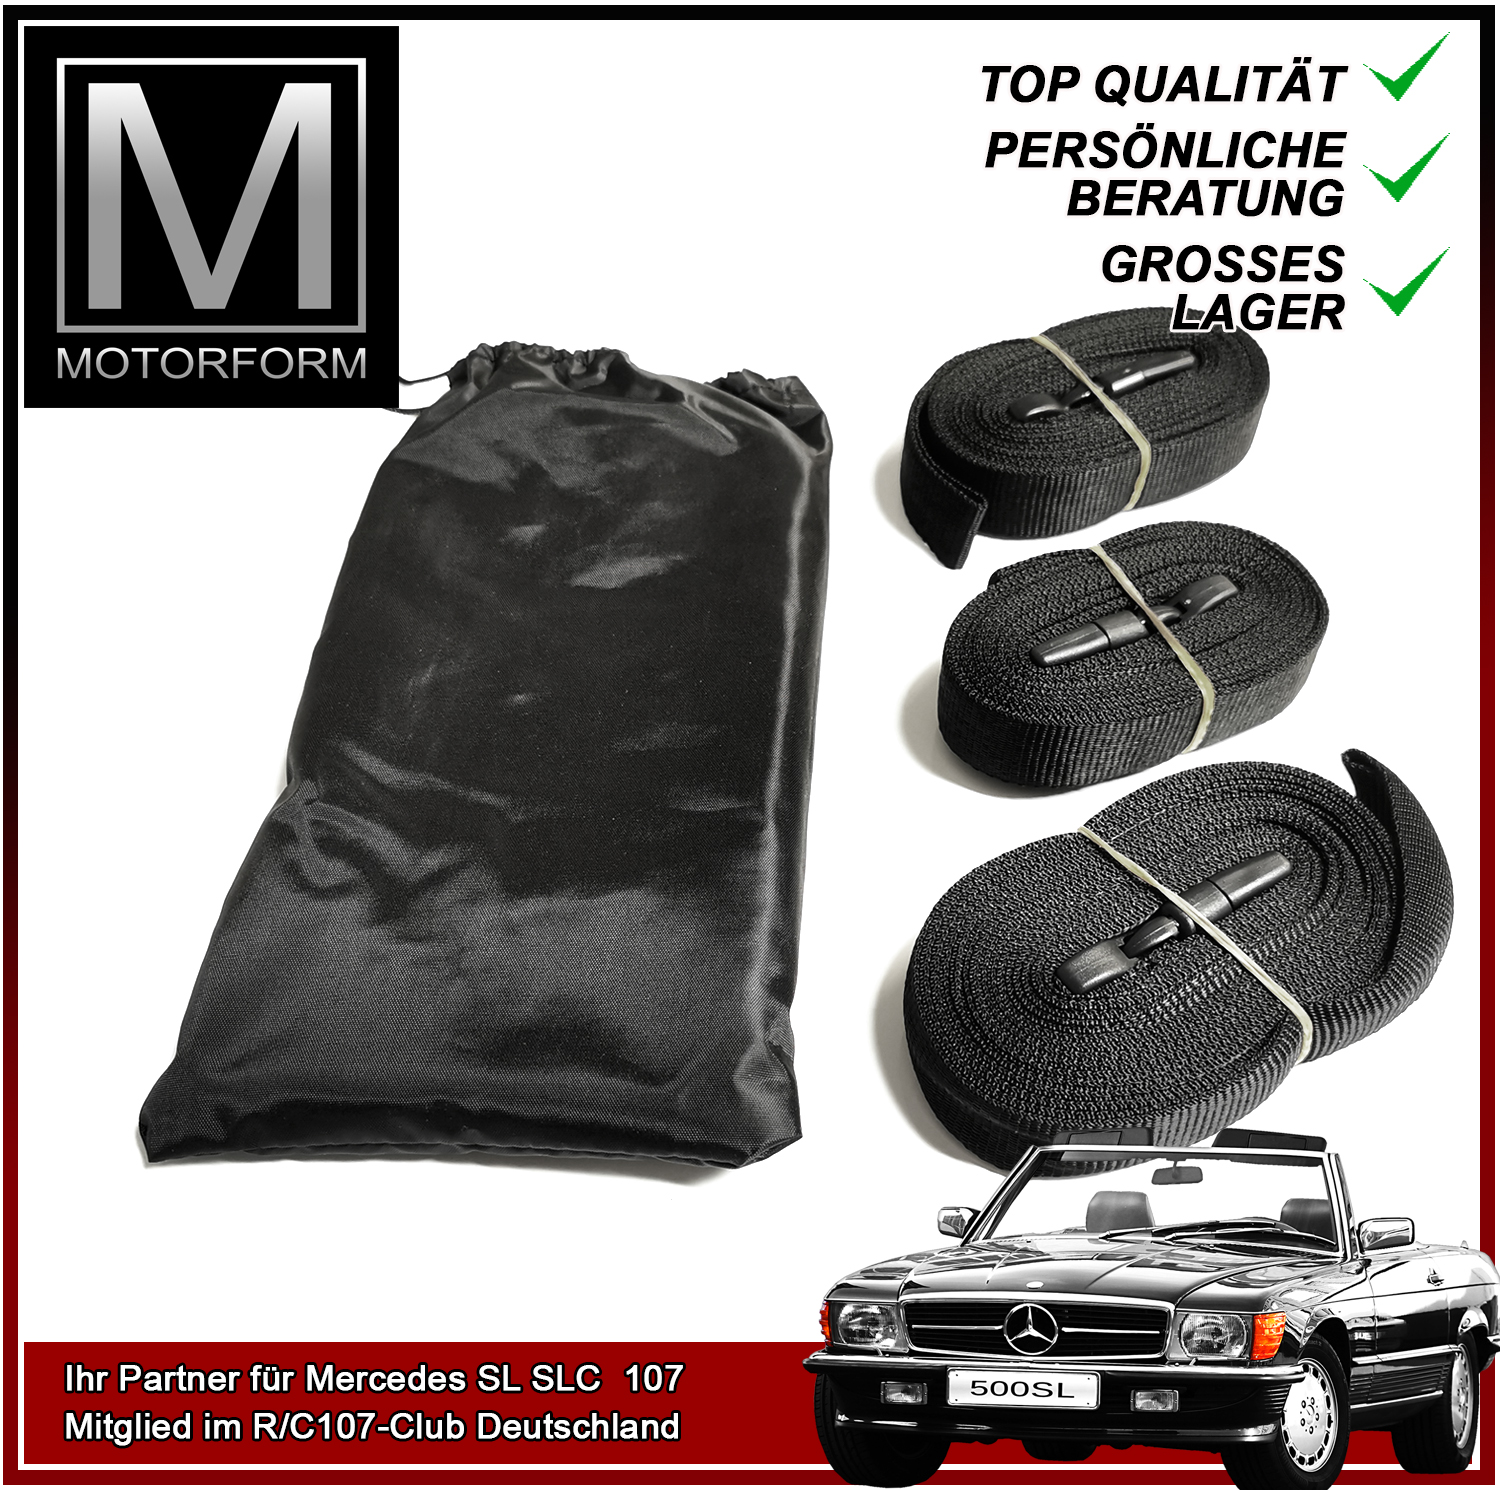 3 Pieces Over Body Strap Set for Maserati 124 Coupe ItalDesign